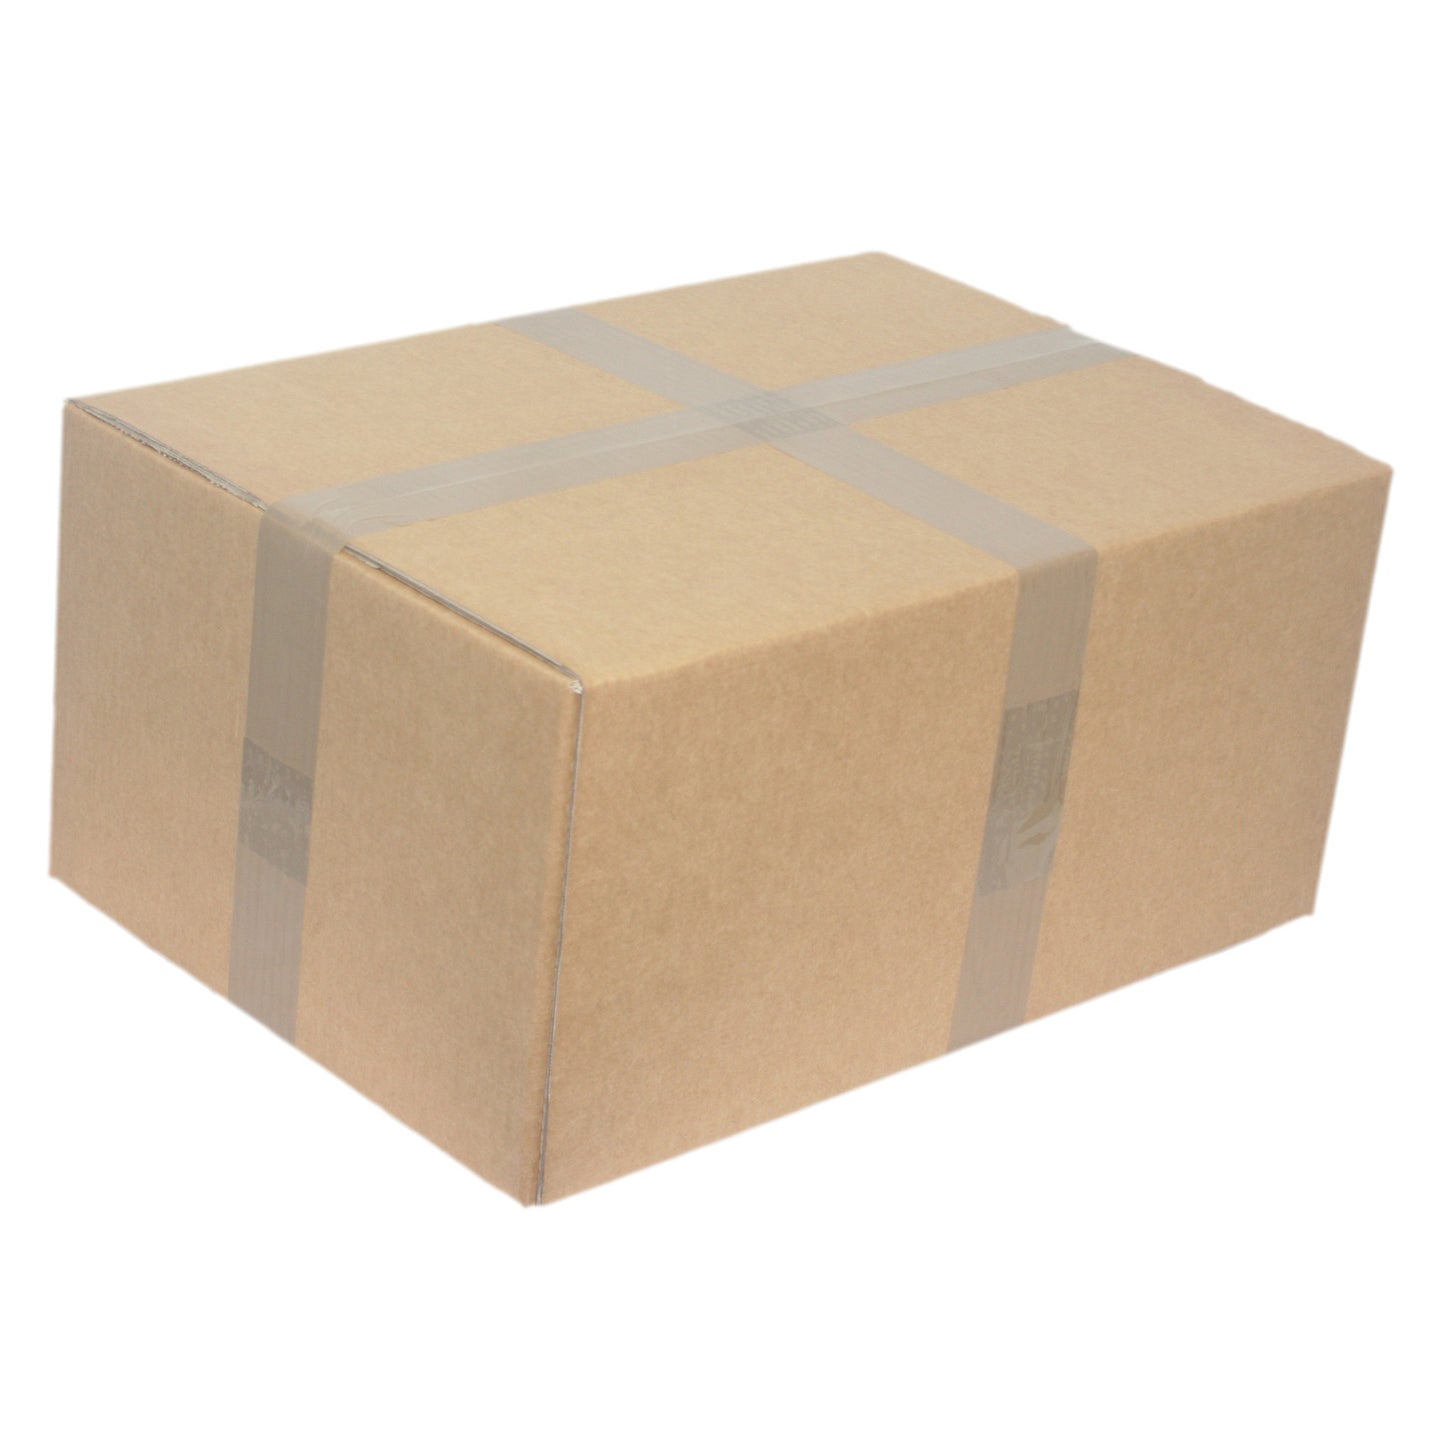 24 Inch Shipping Carton